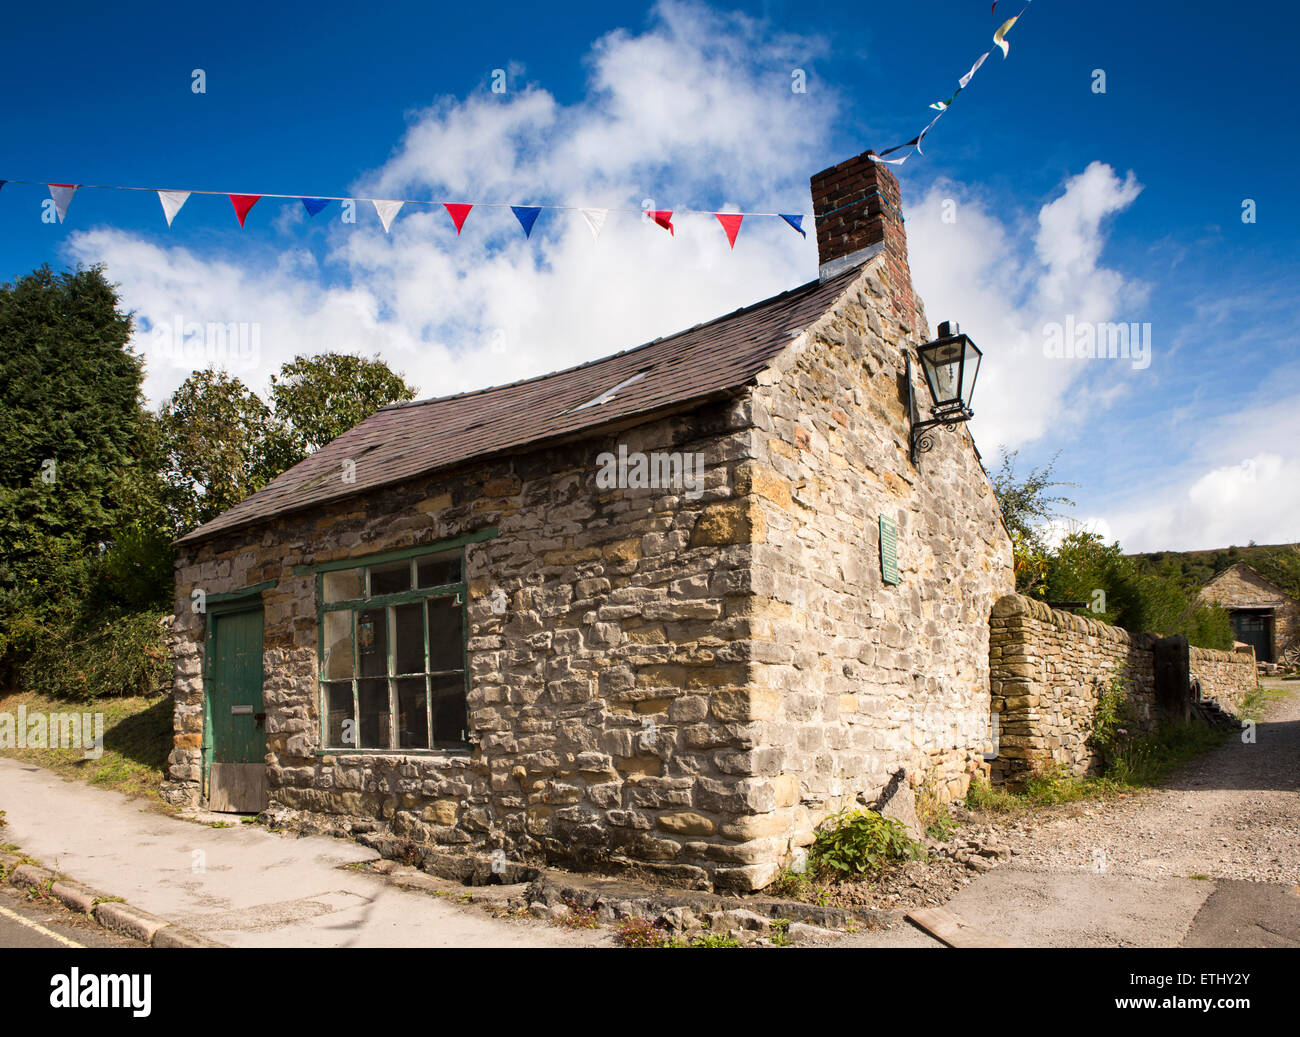 UK, England, Derbyshire, Eyam, Town End, Old stone dwelling at entrance to Bradshaw Hall Stock Photo